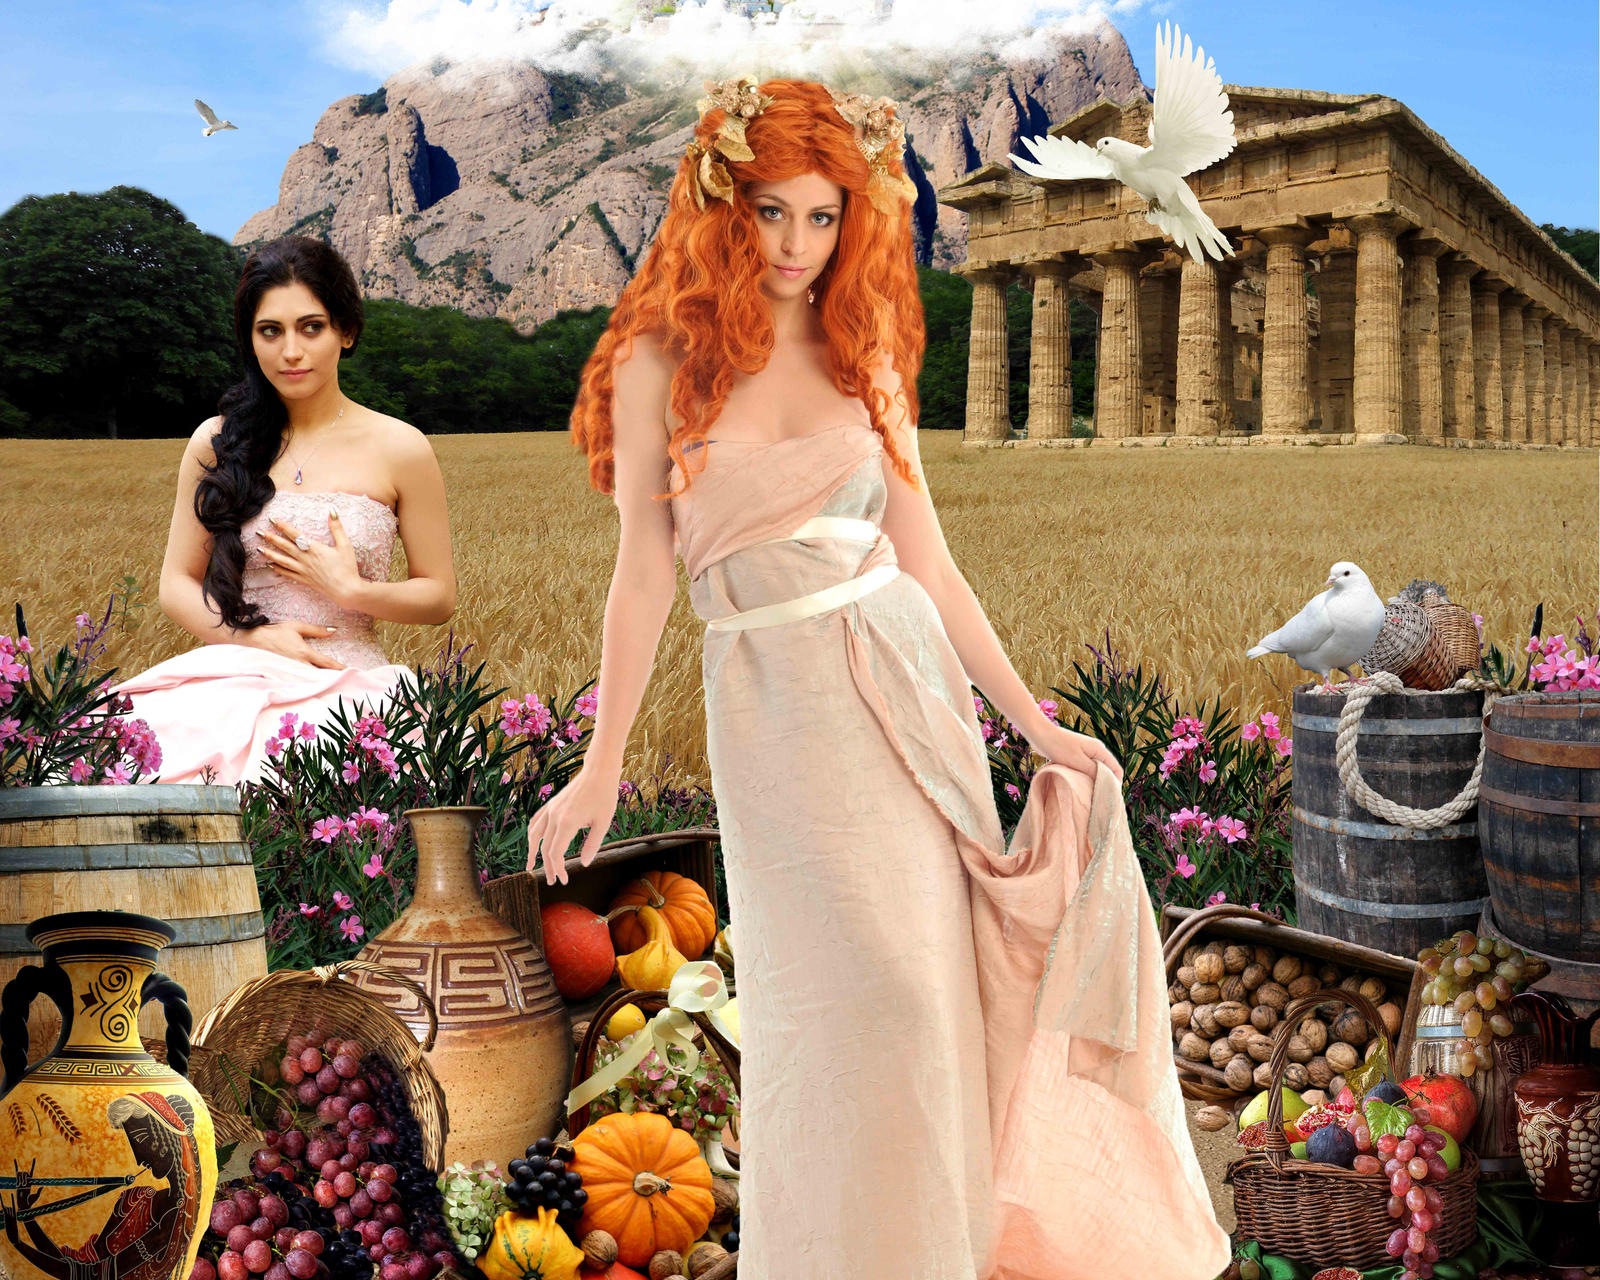 Goddess Demeter and Persephone